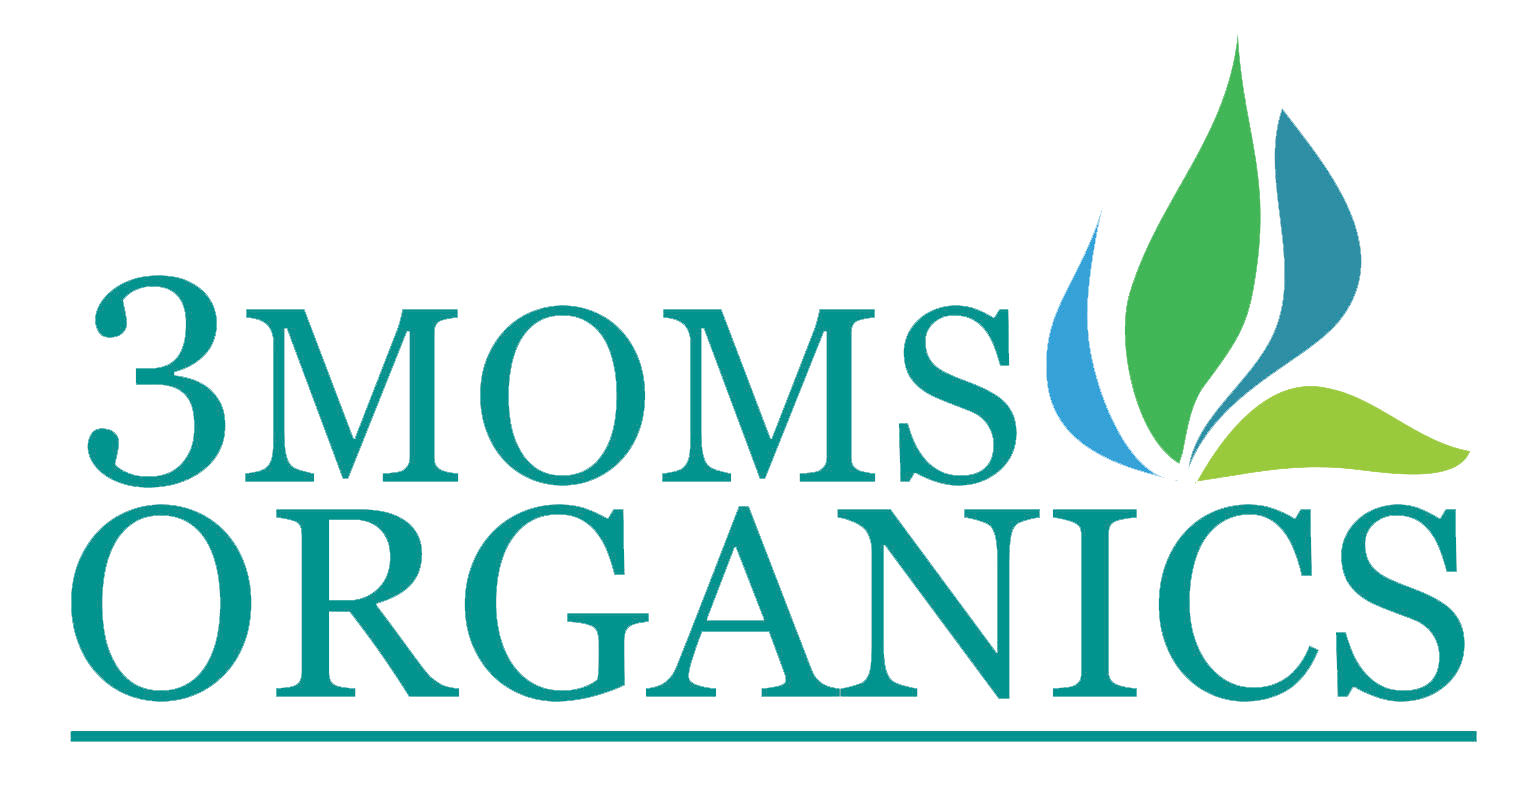 3 Moms Organics LLC